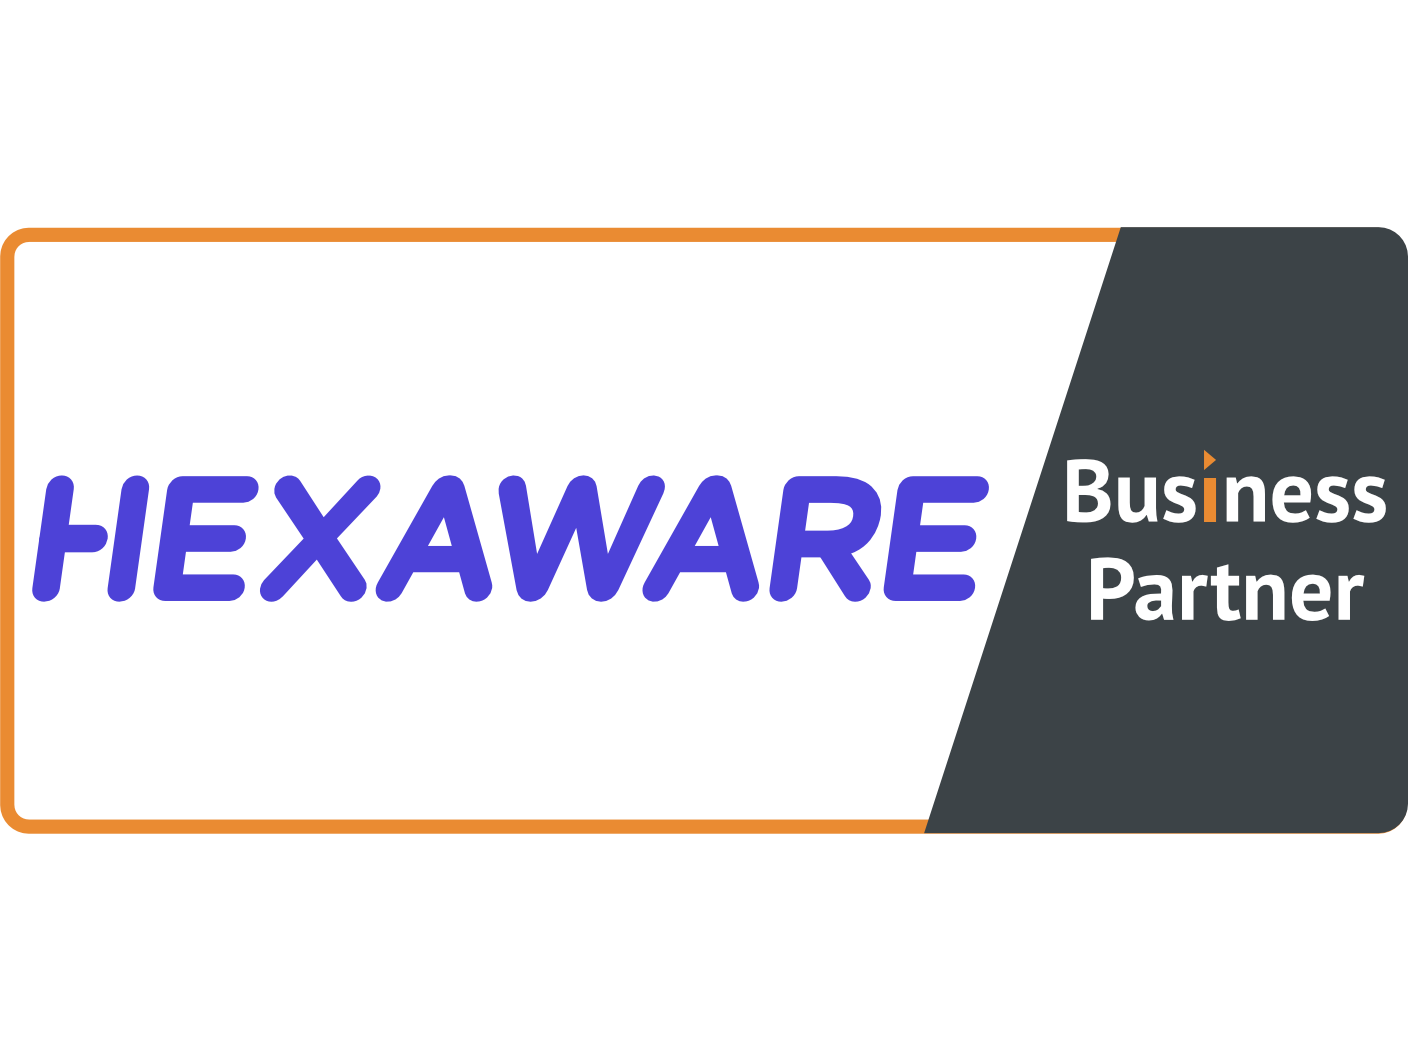 Hexaware - Business Partner